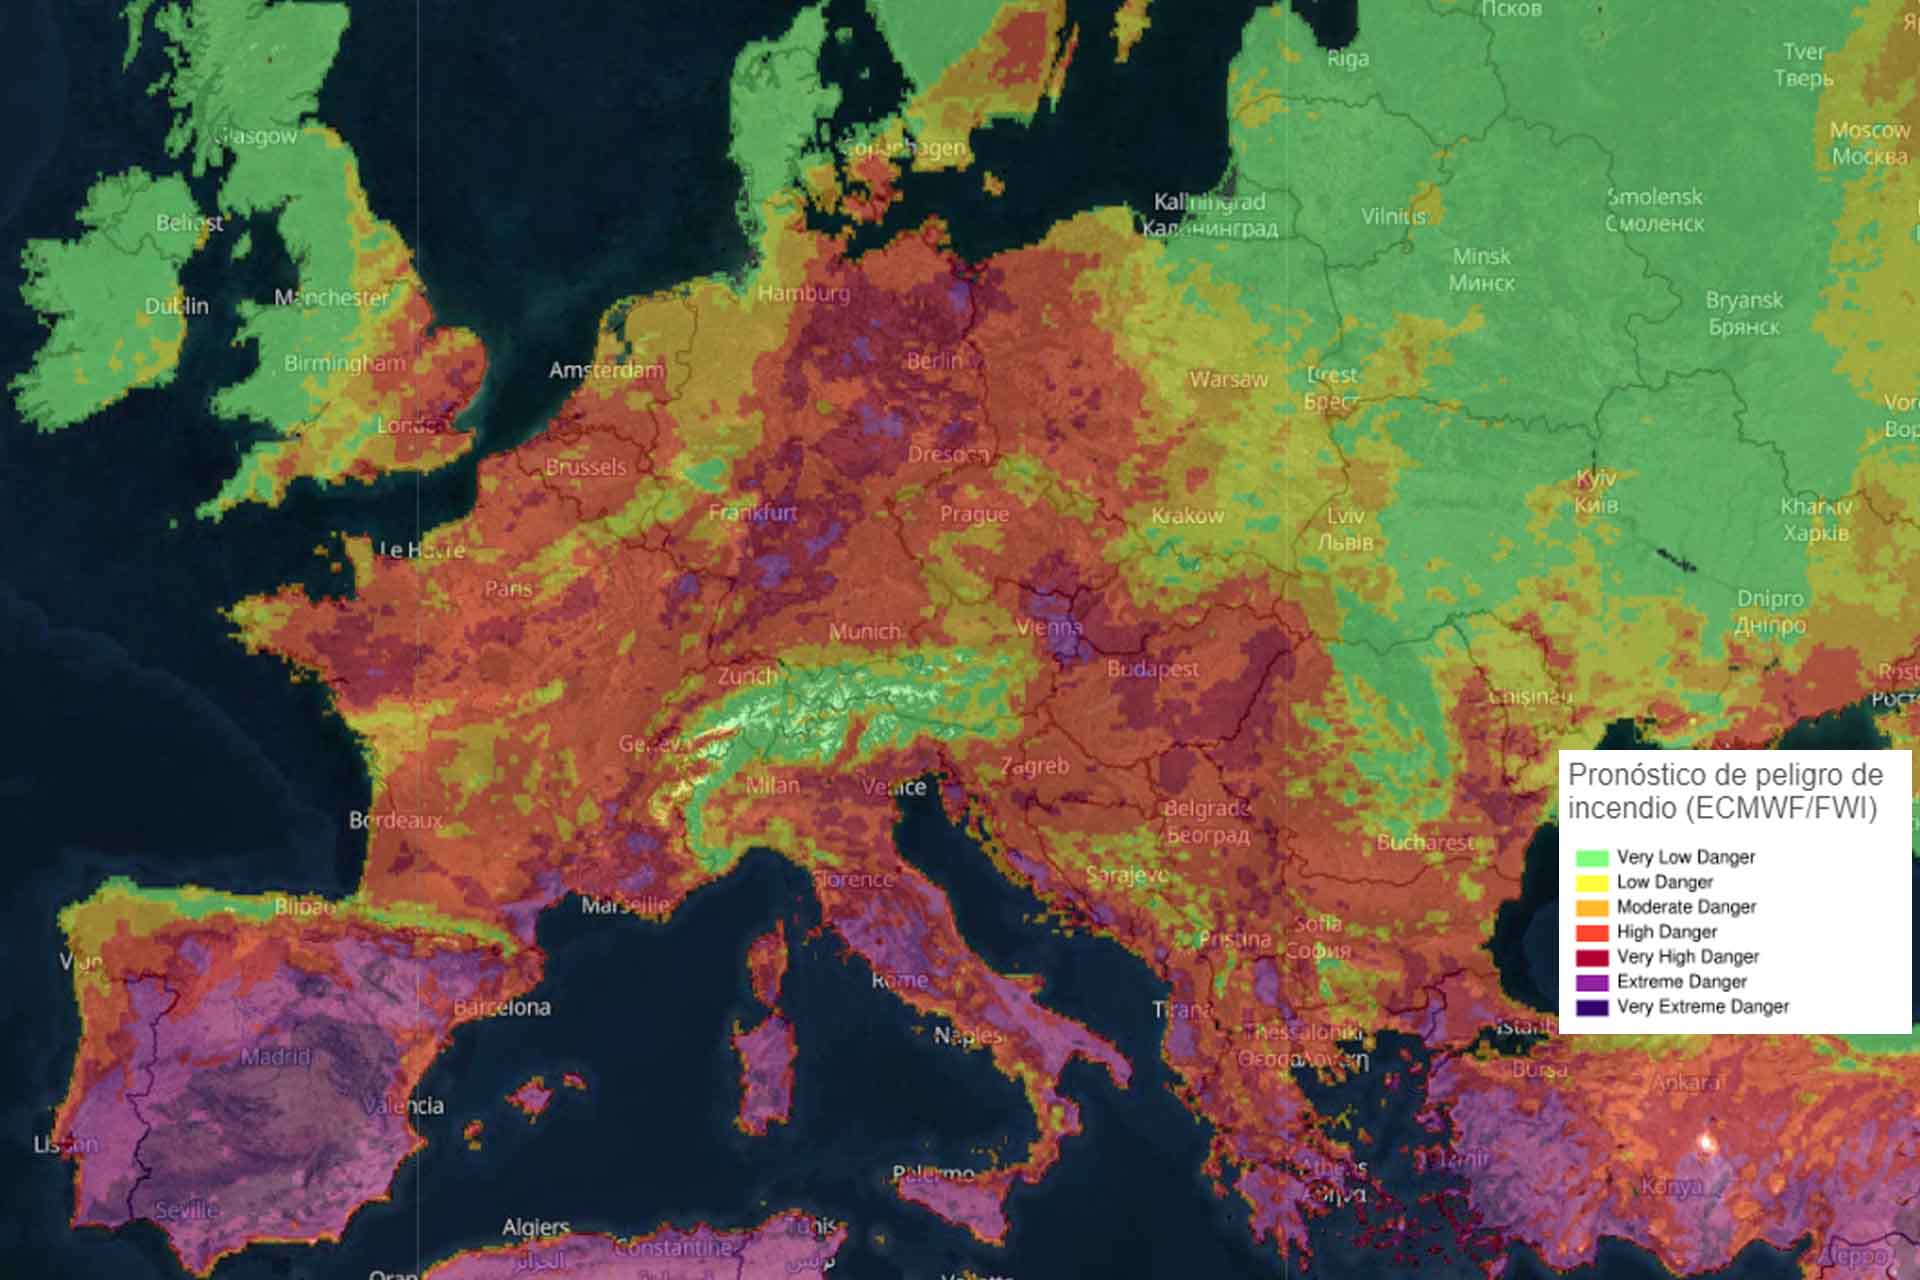 Pronóstico de peligro de incendios en Europa a 25 de julio de 2022 / Imagen: Copernicus